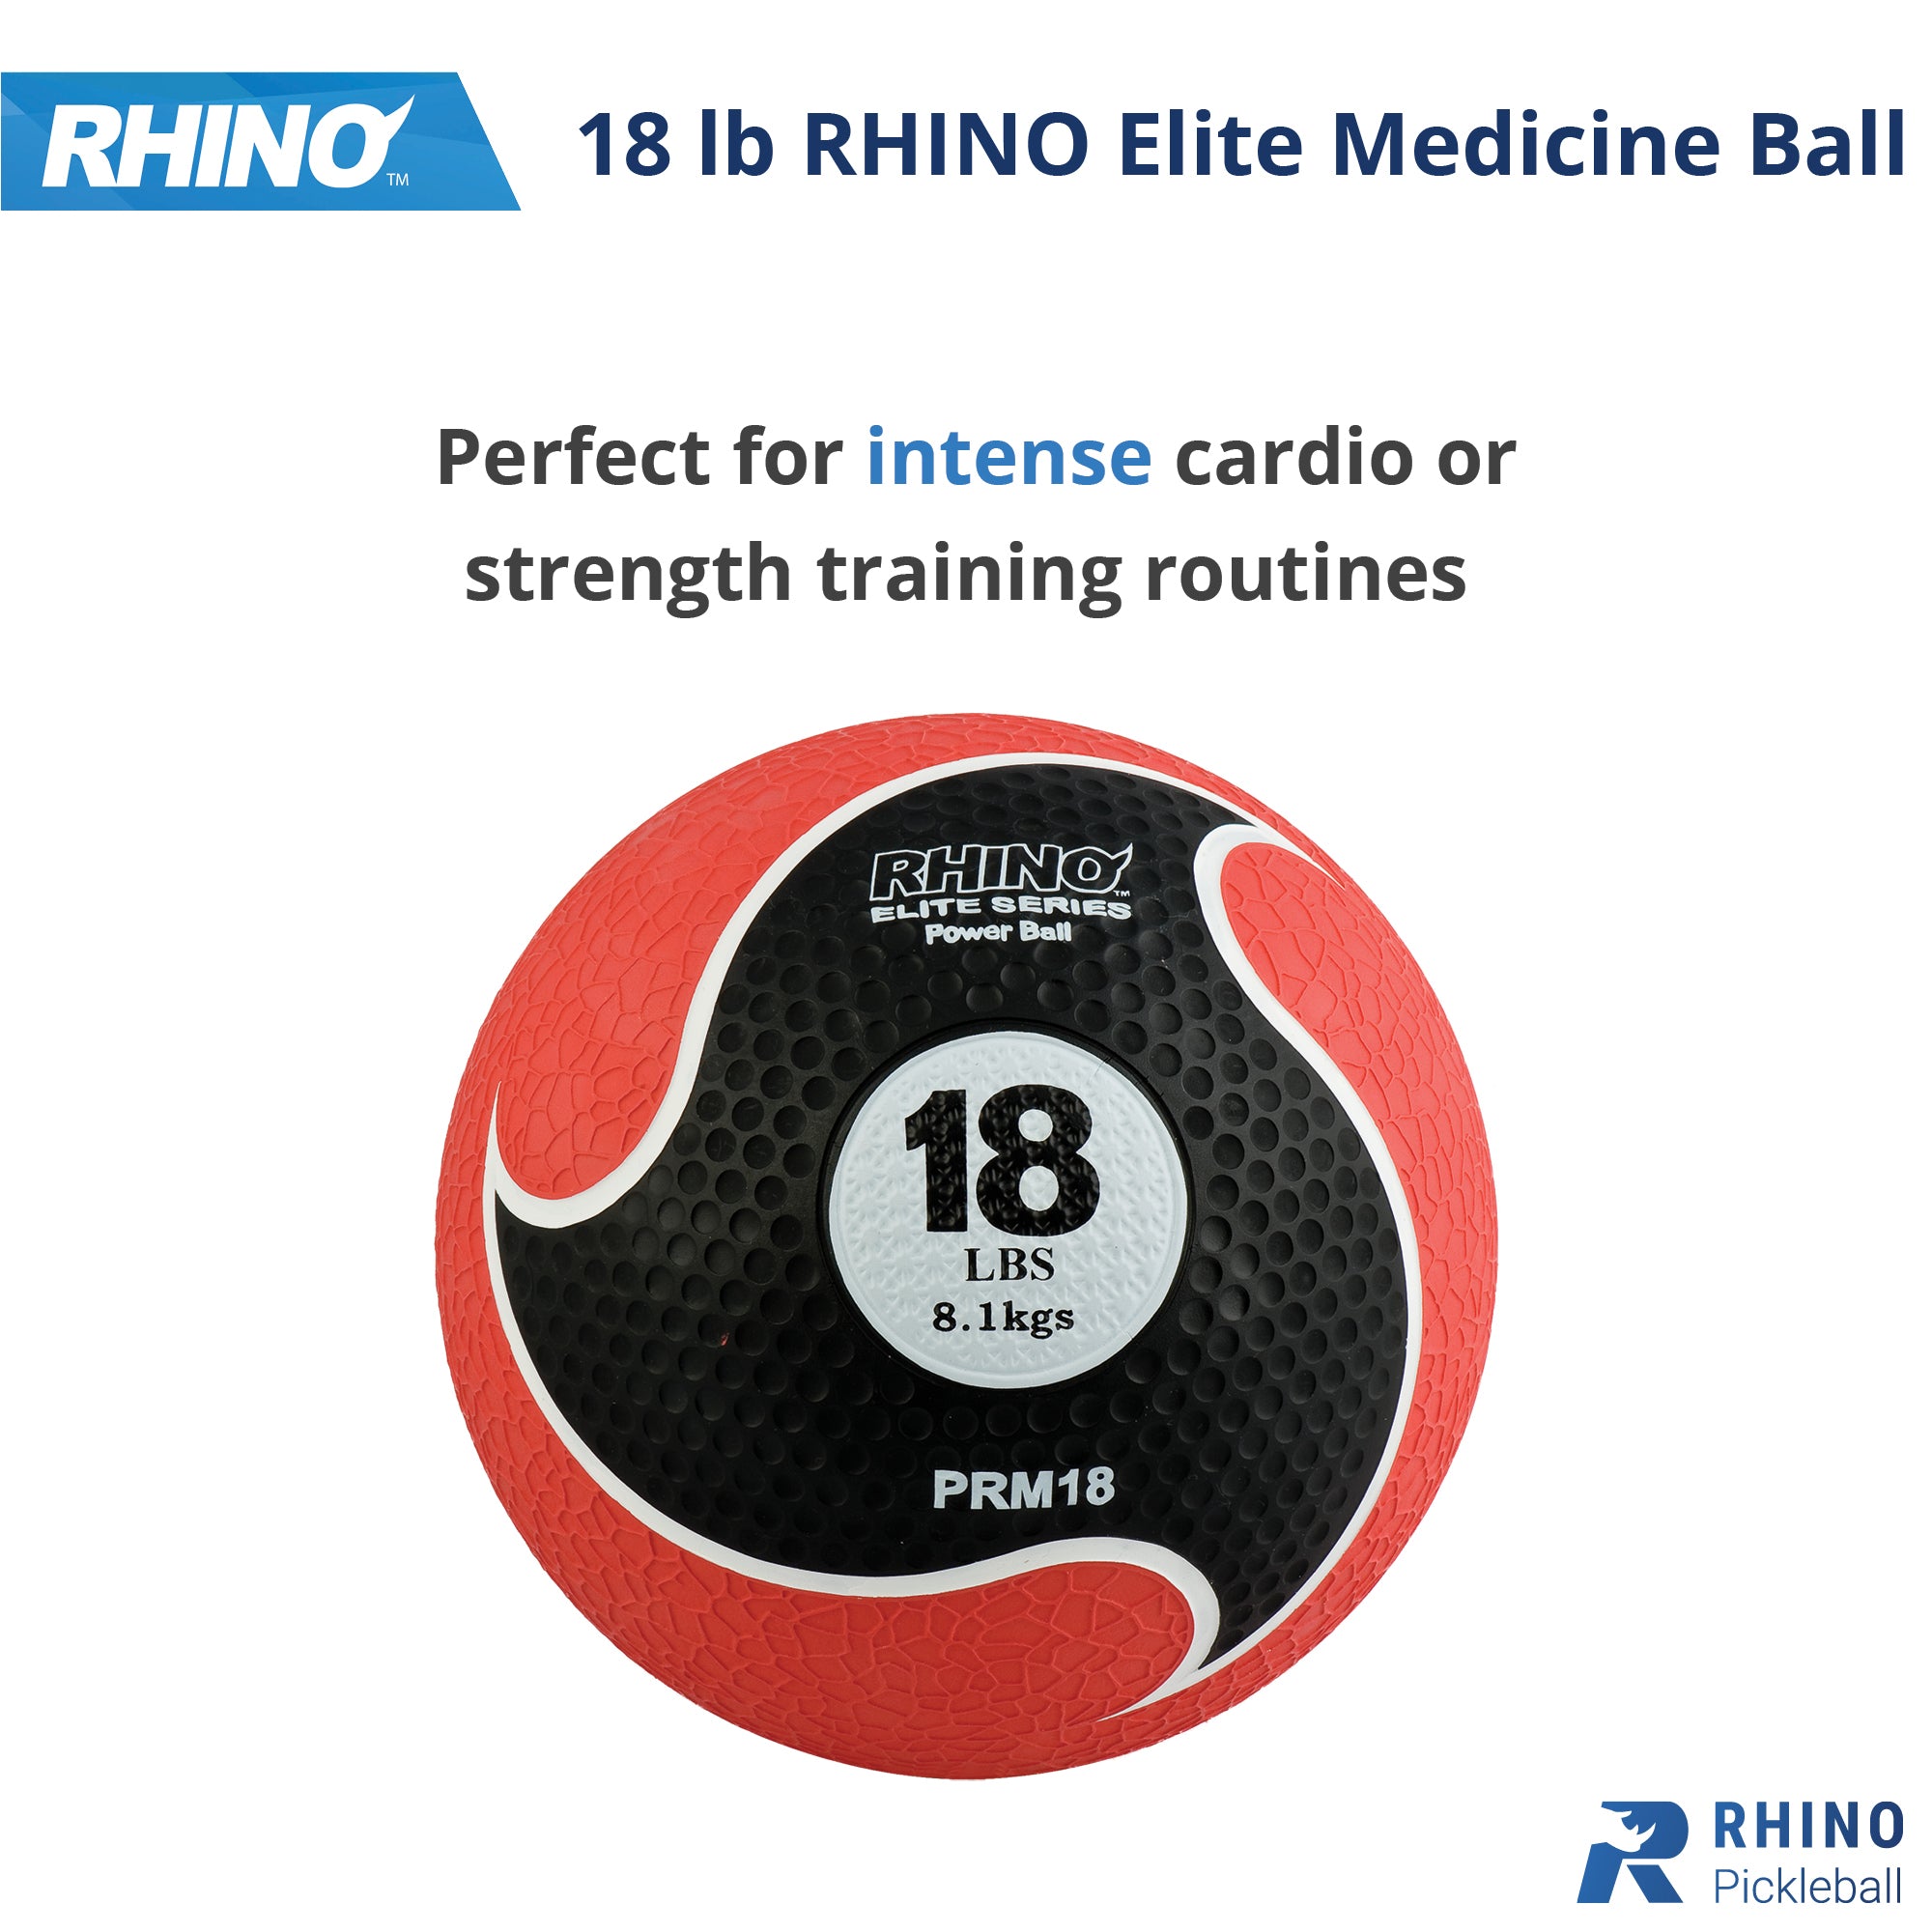 Rhino Elite Medicine Ball Series 18 lb RHINO __label:NEW! Agility fitness medicine ball physical therapy resistance Training